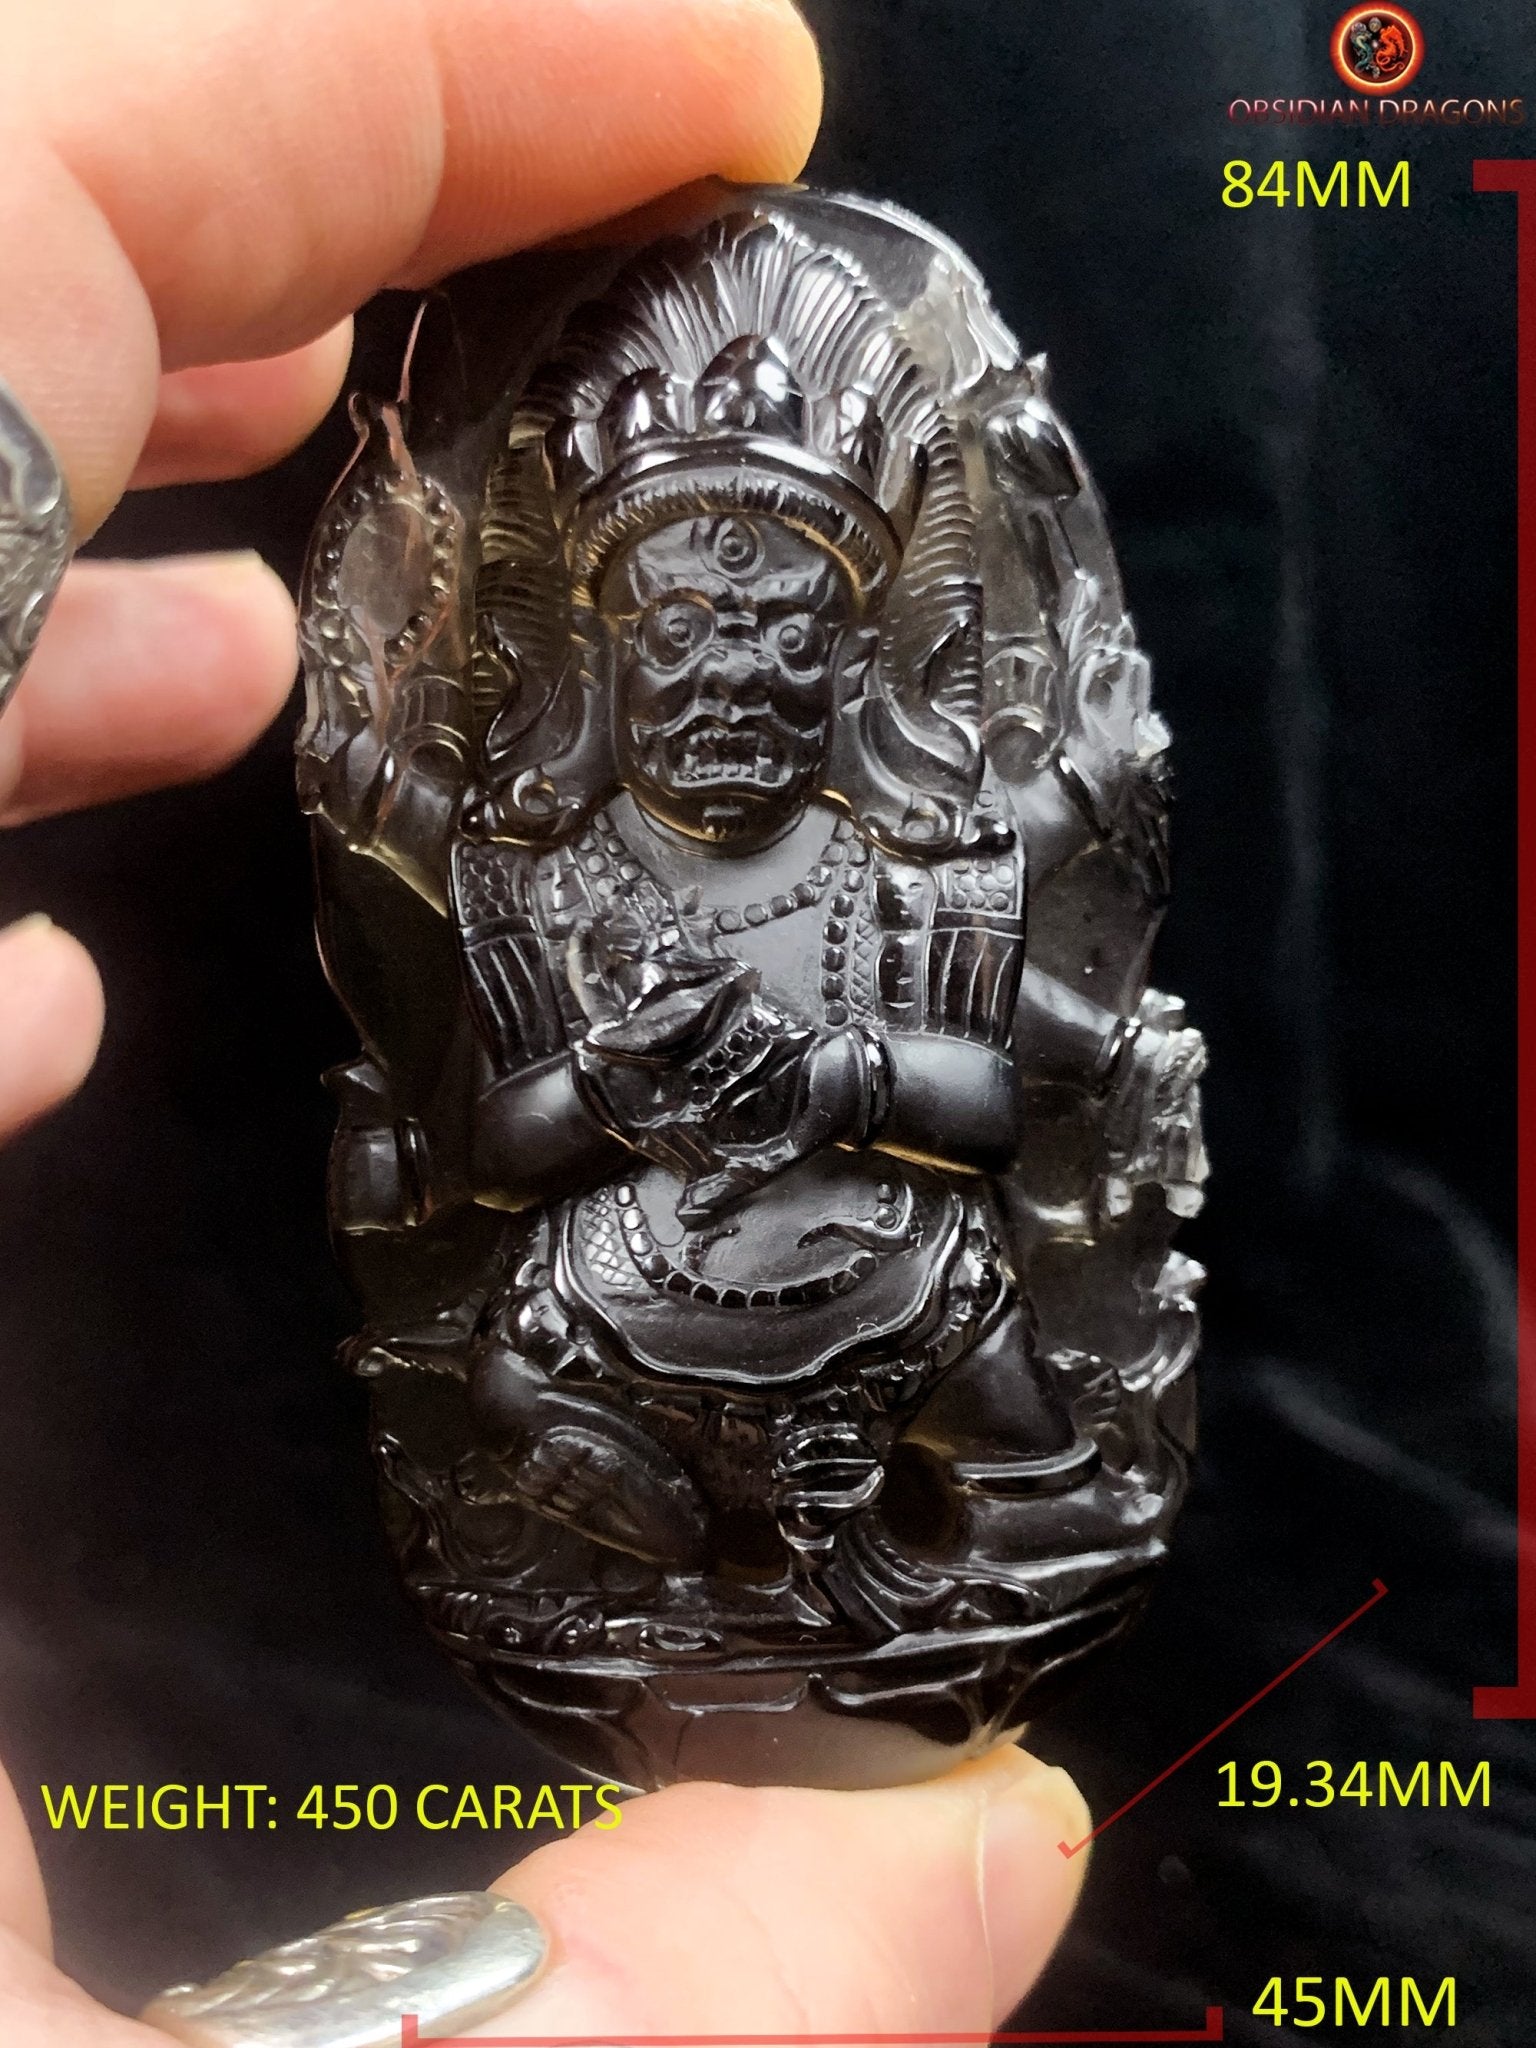 Pierre votive bouddhiste- Mahakala- Quartz fumé- Rare | obsidian dragons